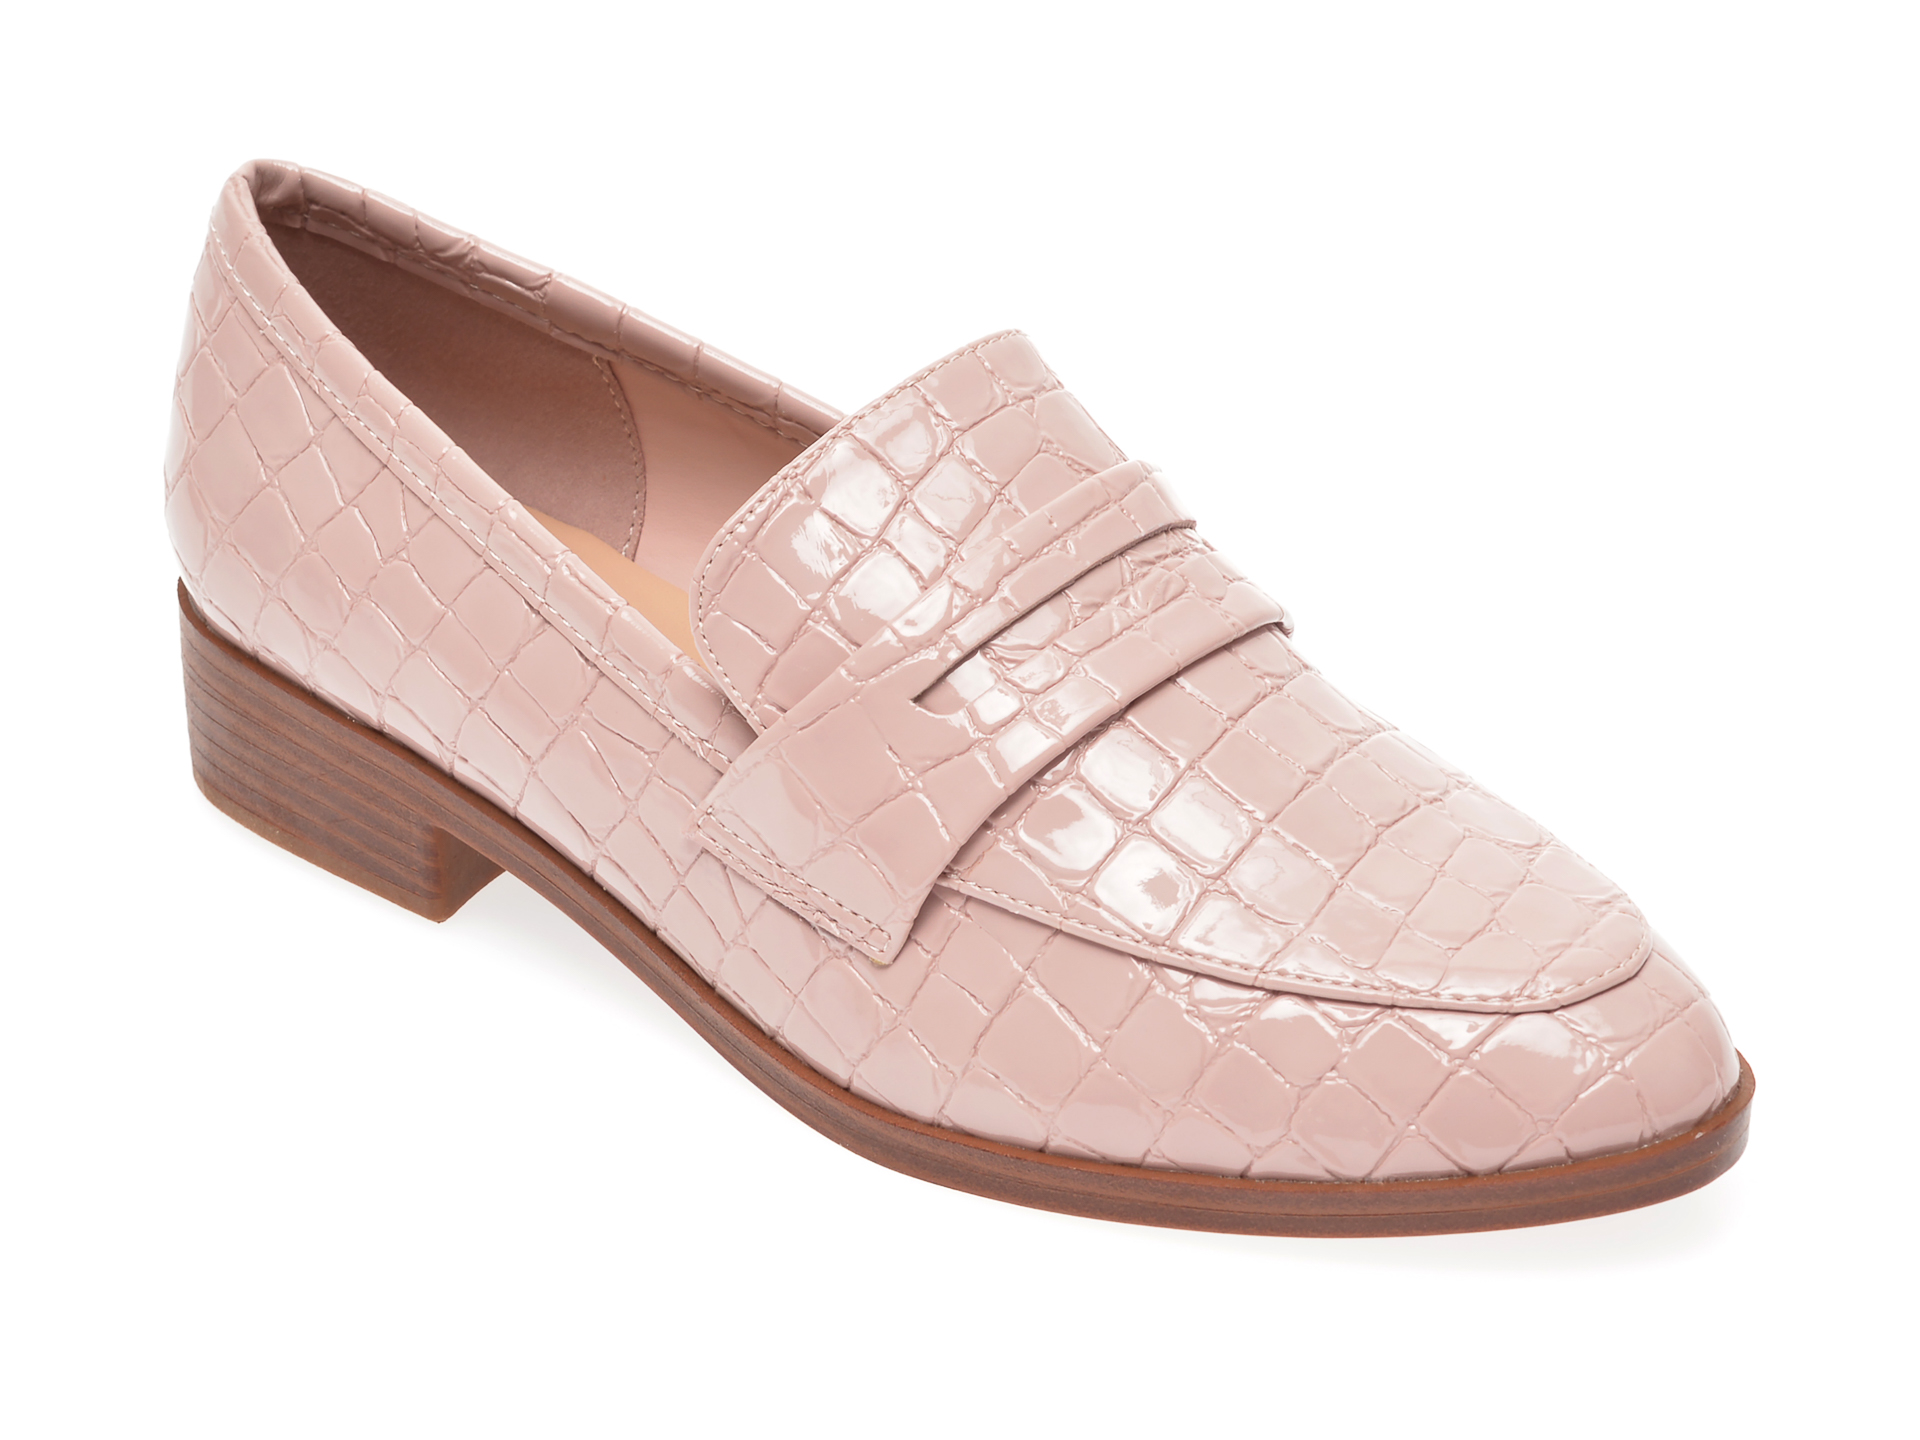 Pantofi ALDO roz, Langlet680, din piele ecologica